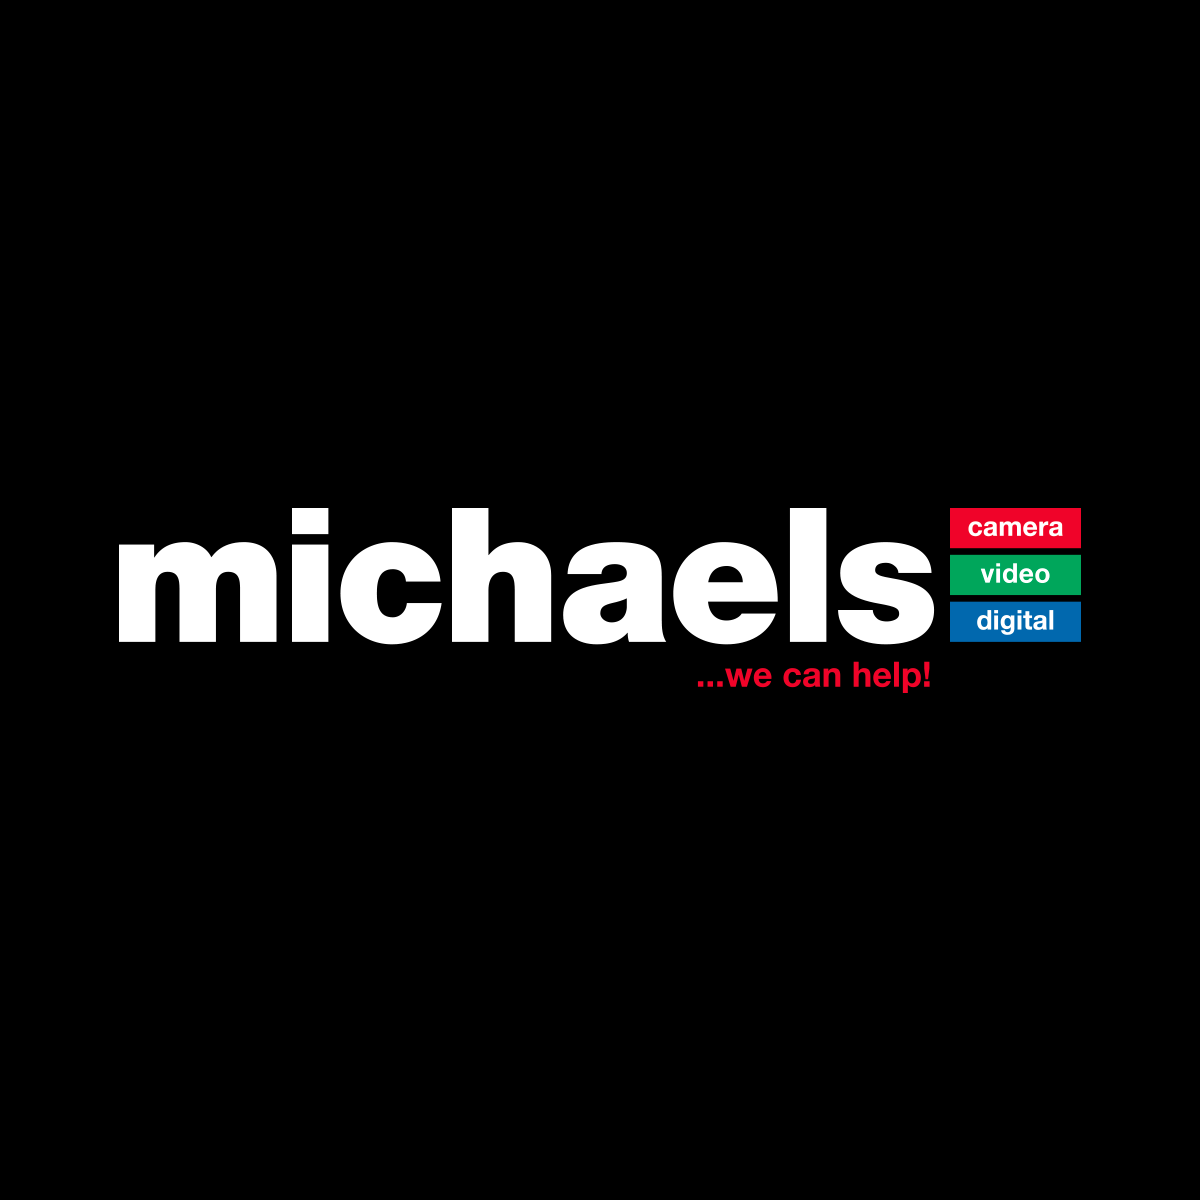 Michaels Camera - Video - Digital